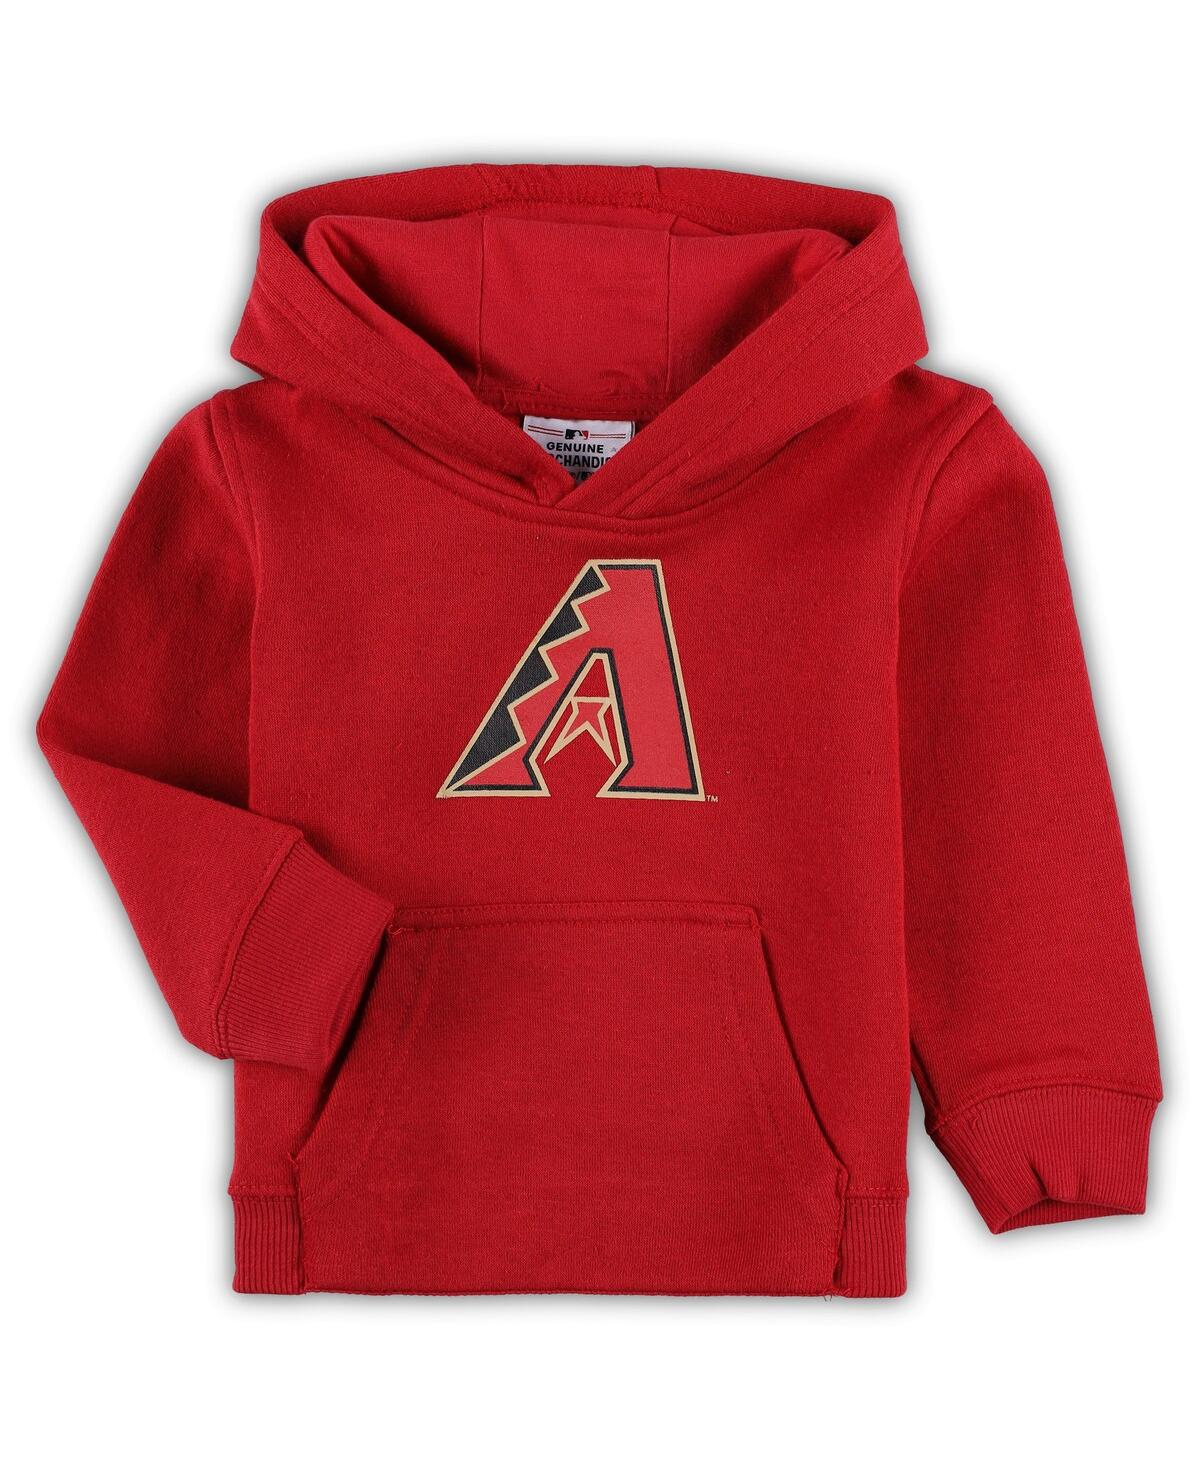 Outerstuff Babies' Toddler Boys And Girls Red Arizona Diamondbacks Team Primary Logo Fleece Pullover Hoodie